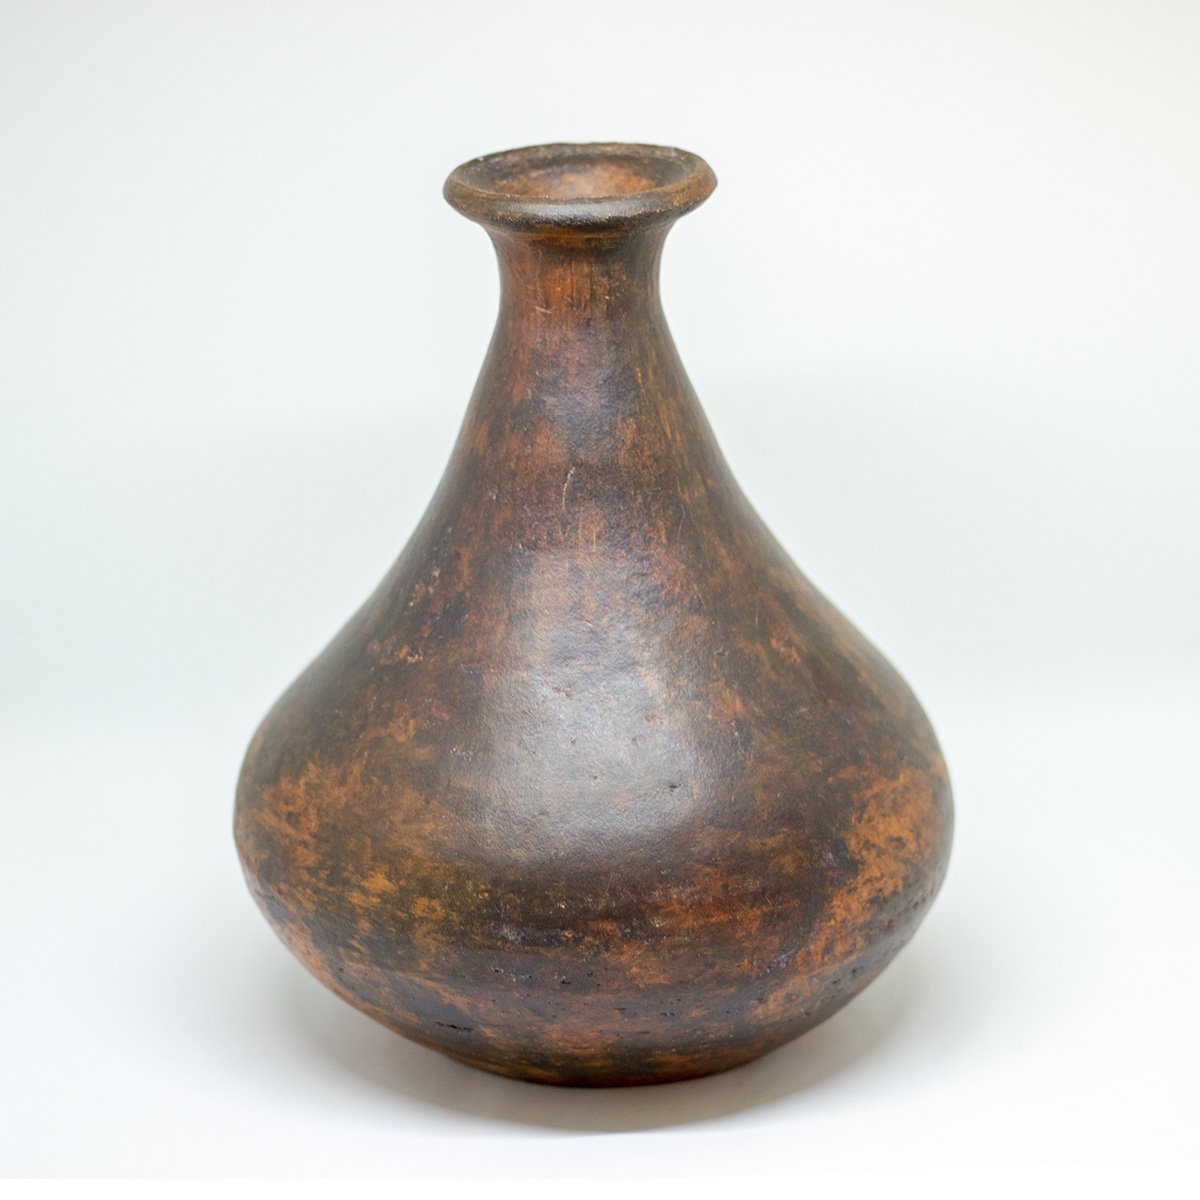 yesterday handmade ceramic jug - een stip